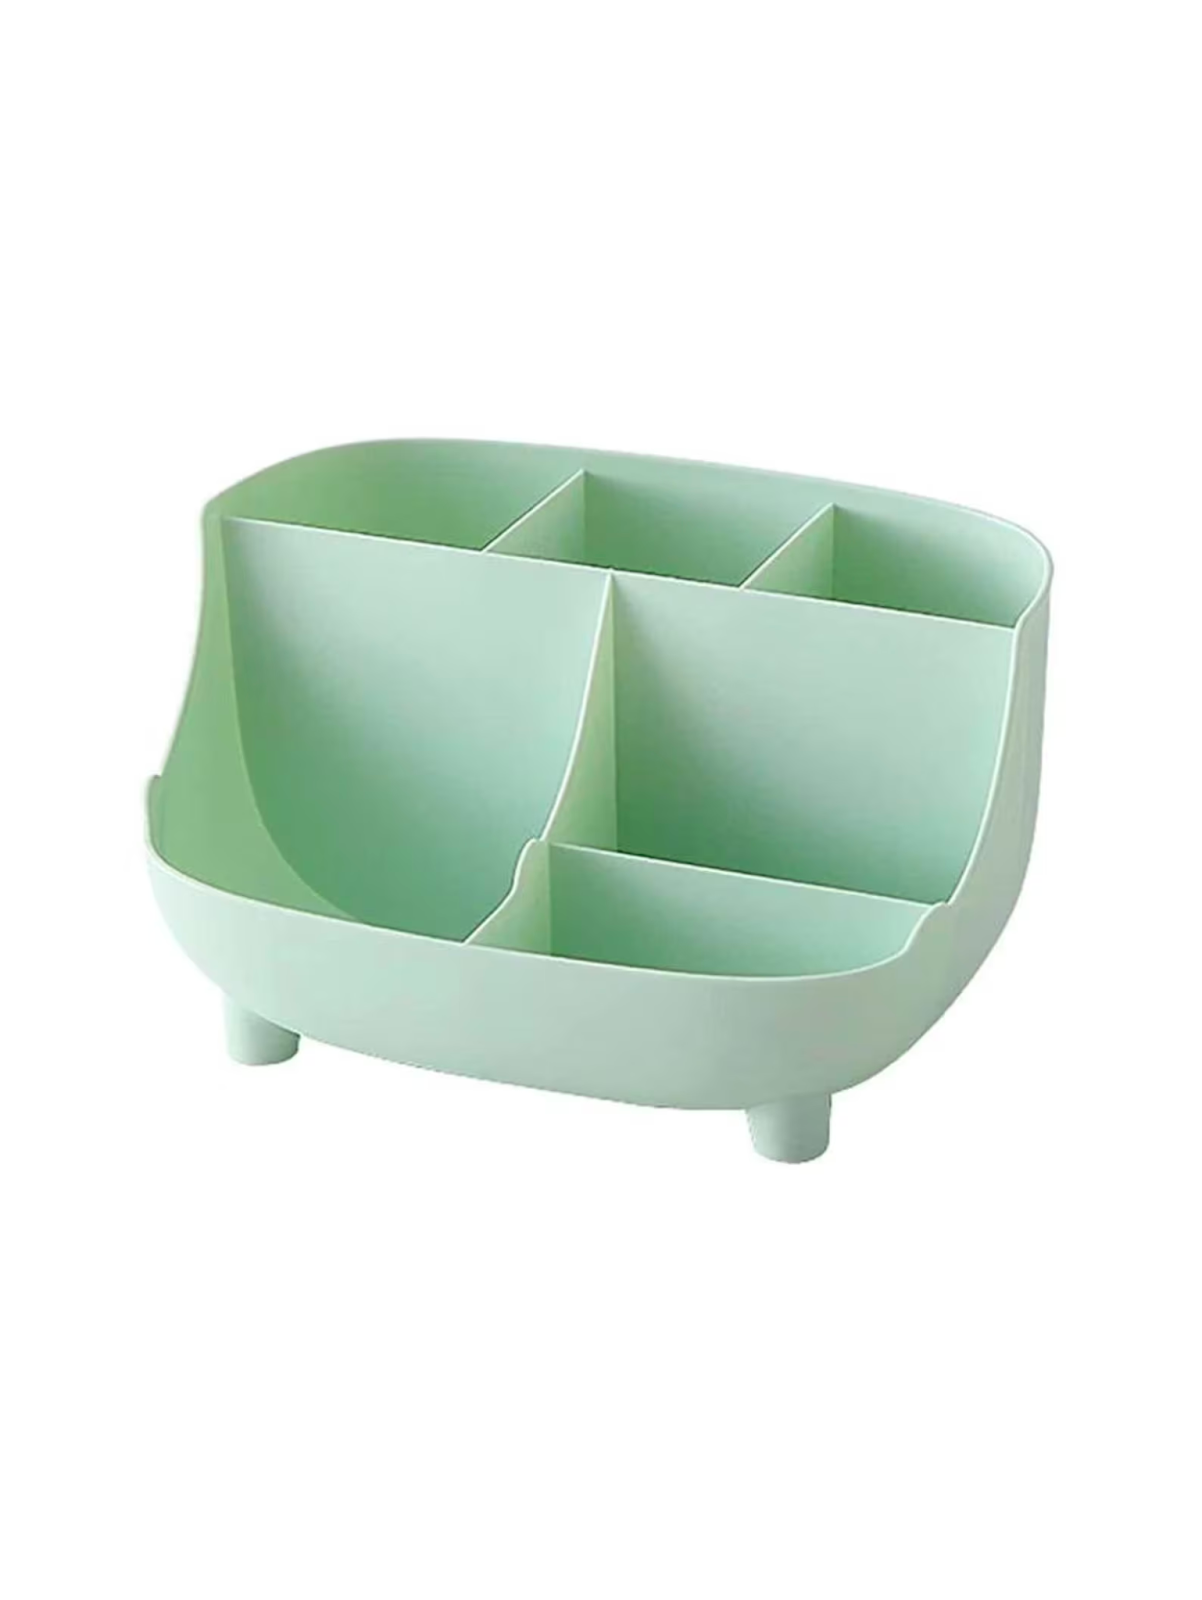 mint green desk organizer tray